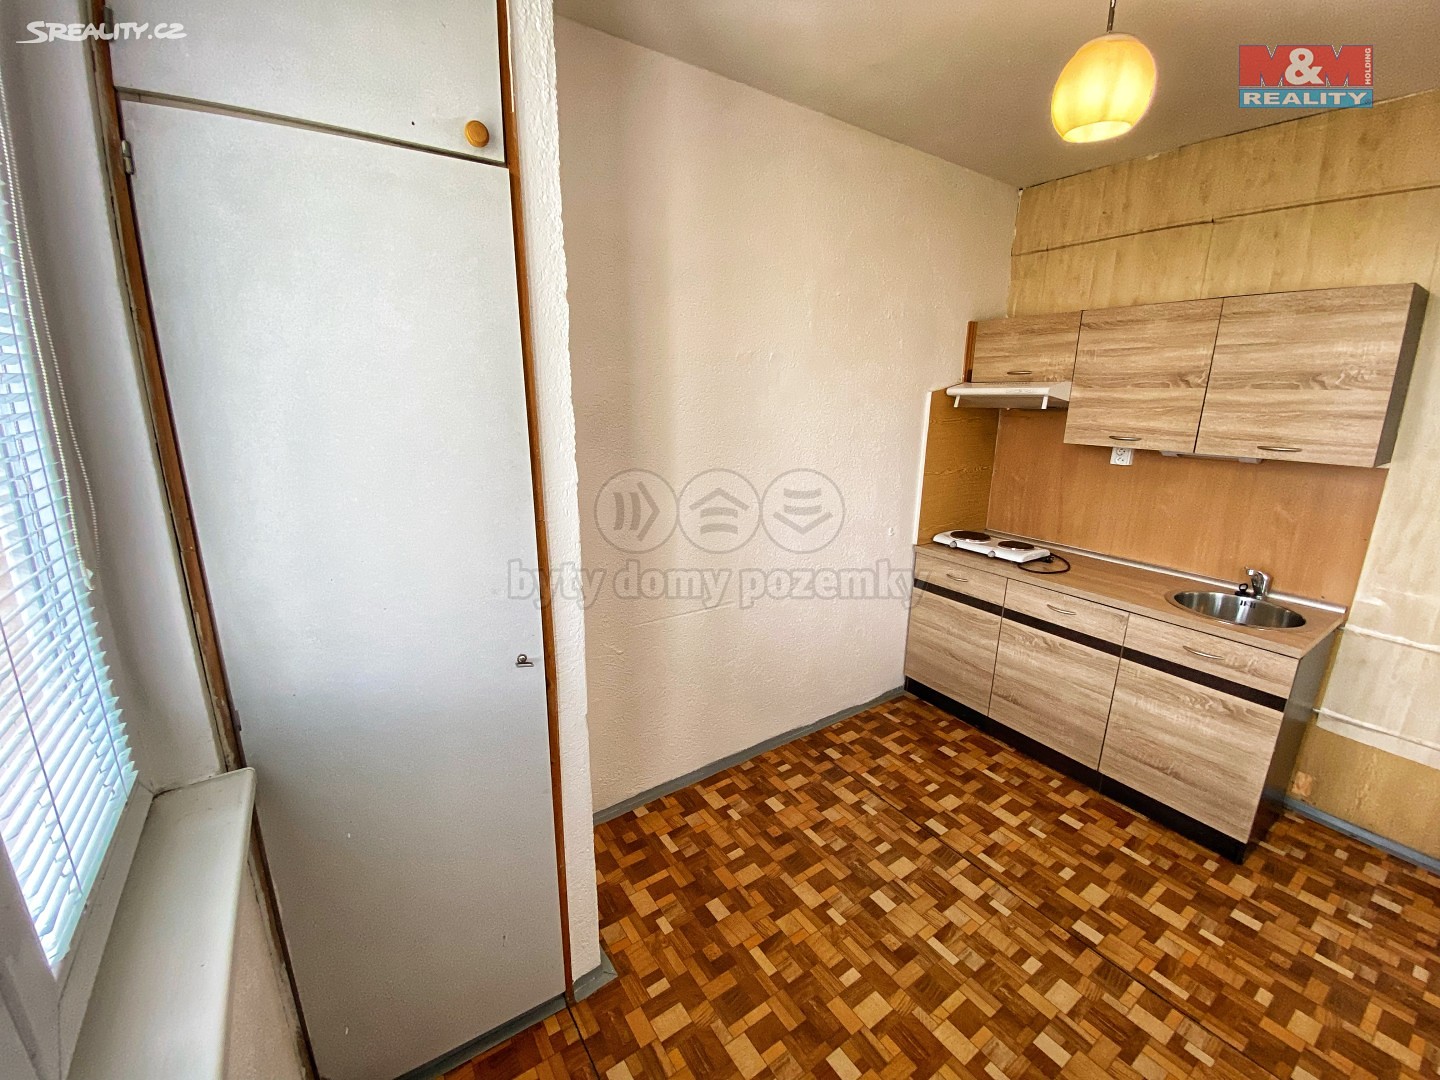 Prodej bytu 1+1 31 m², Aloise Gavlase, Ostrava - Dubina